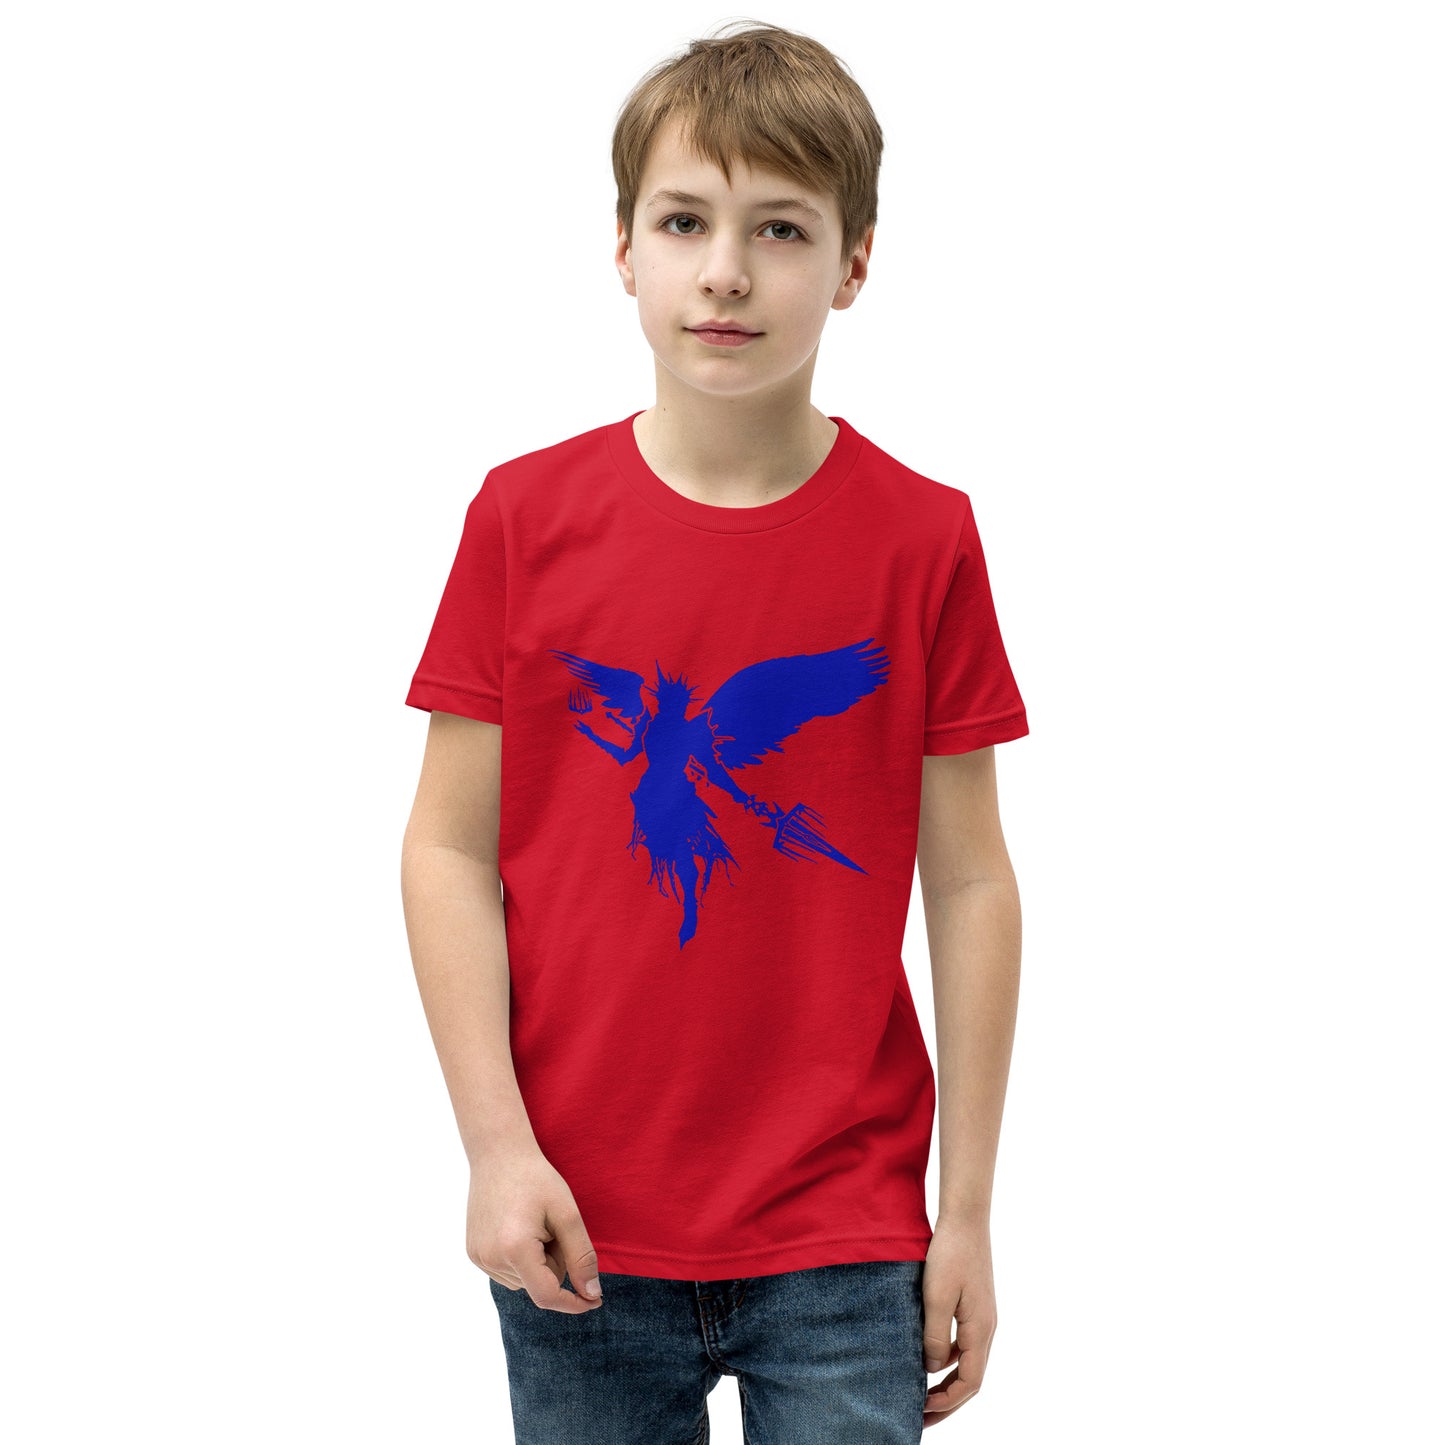 Wraith Eco Youth Short Sleeve T-Shirt